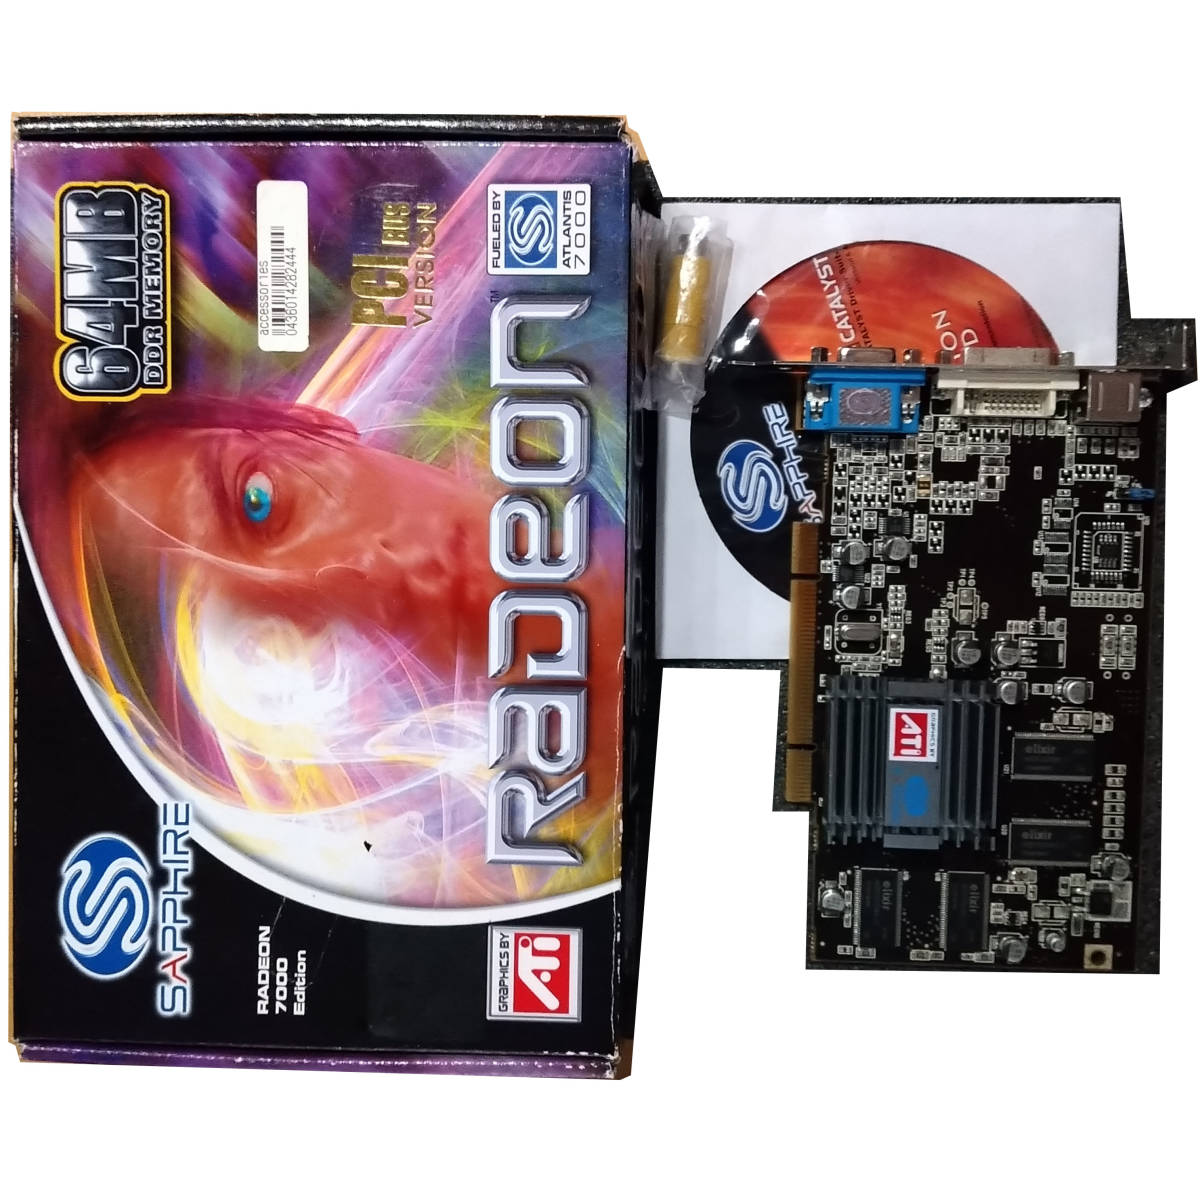 SAPPHIRE ATI Radeon R7000 64M DDR PCI VGA/TVO/DVI-I